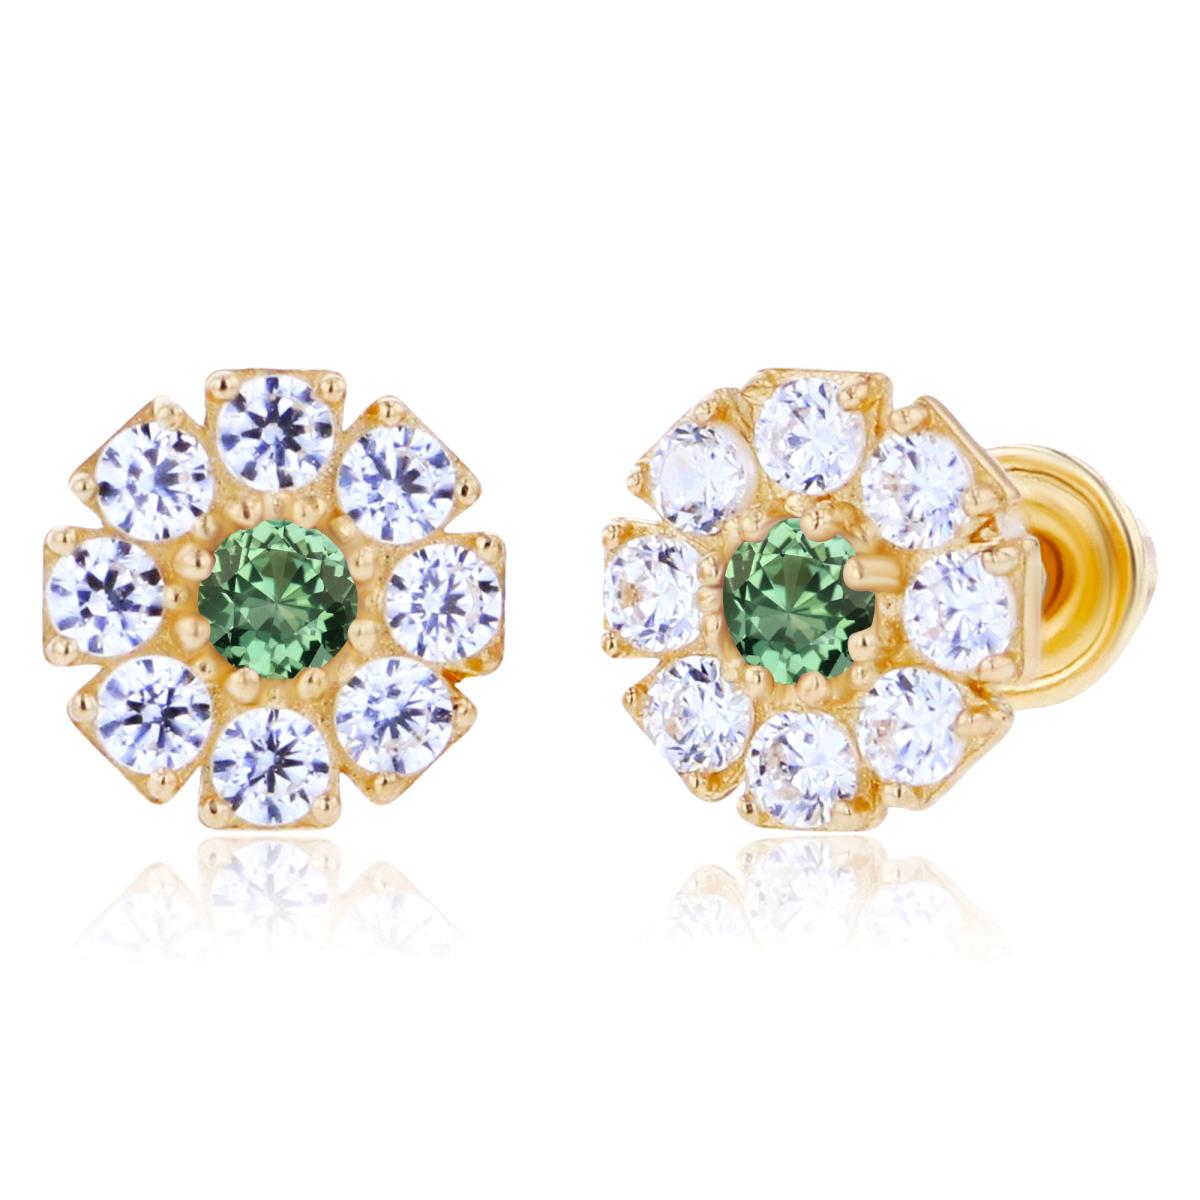 14K Yellow Gold 2mm Round Created Green Sapphire & 1.5mm Created White Sapphire Flower Screwback Earrings